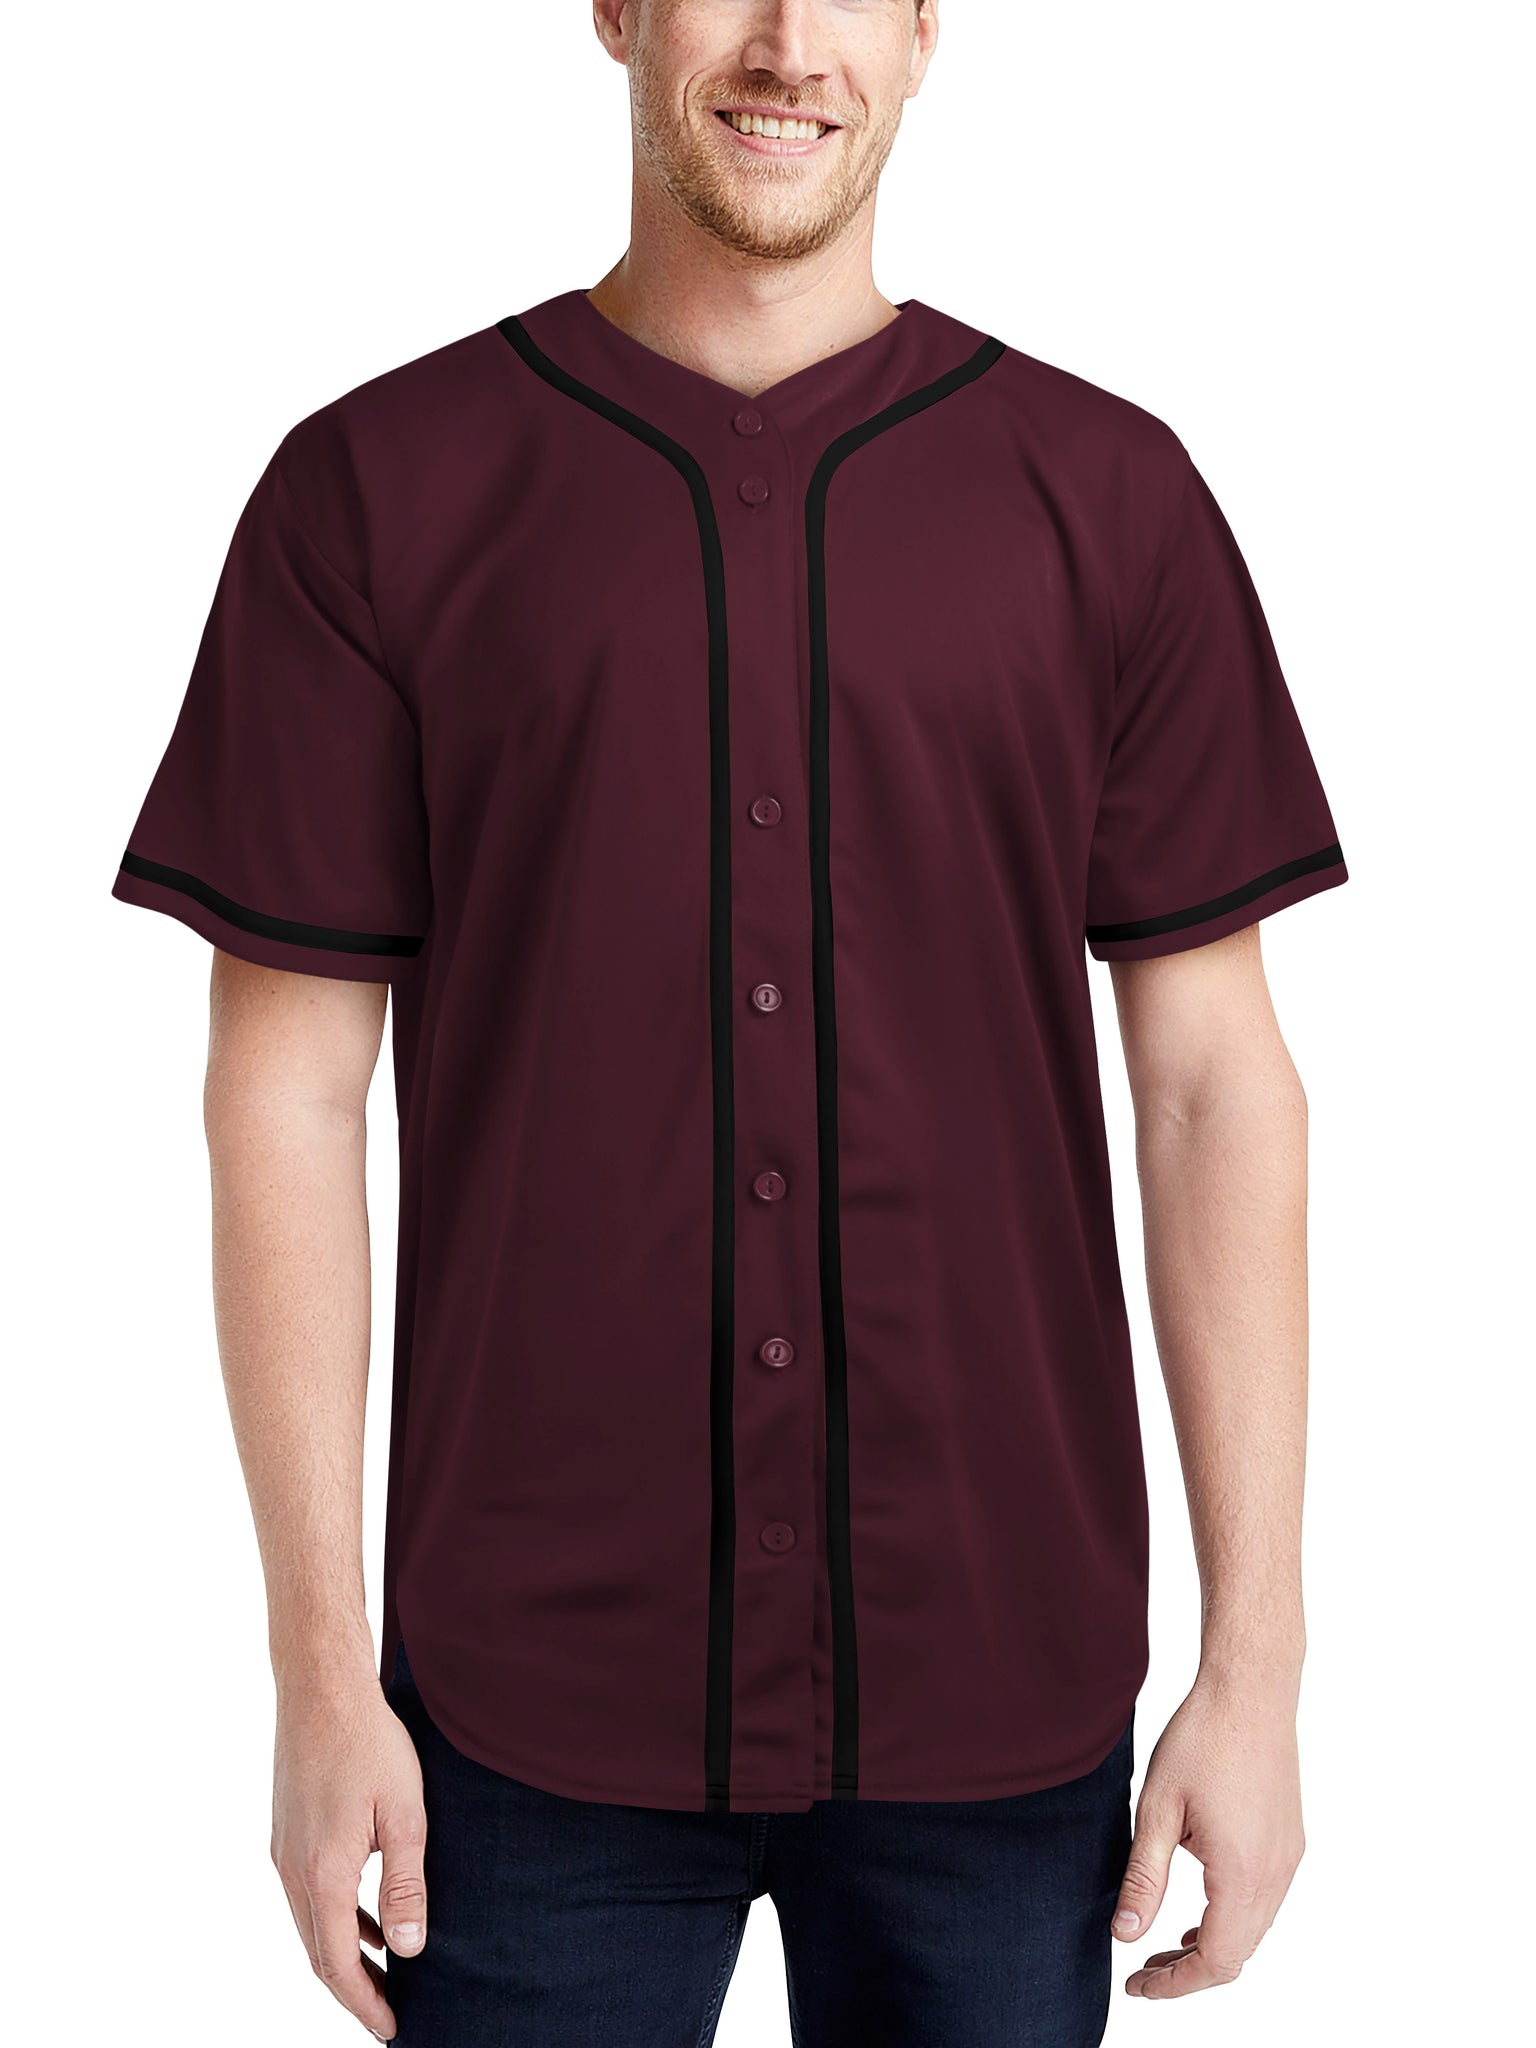 shirt maroon baseball jersey